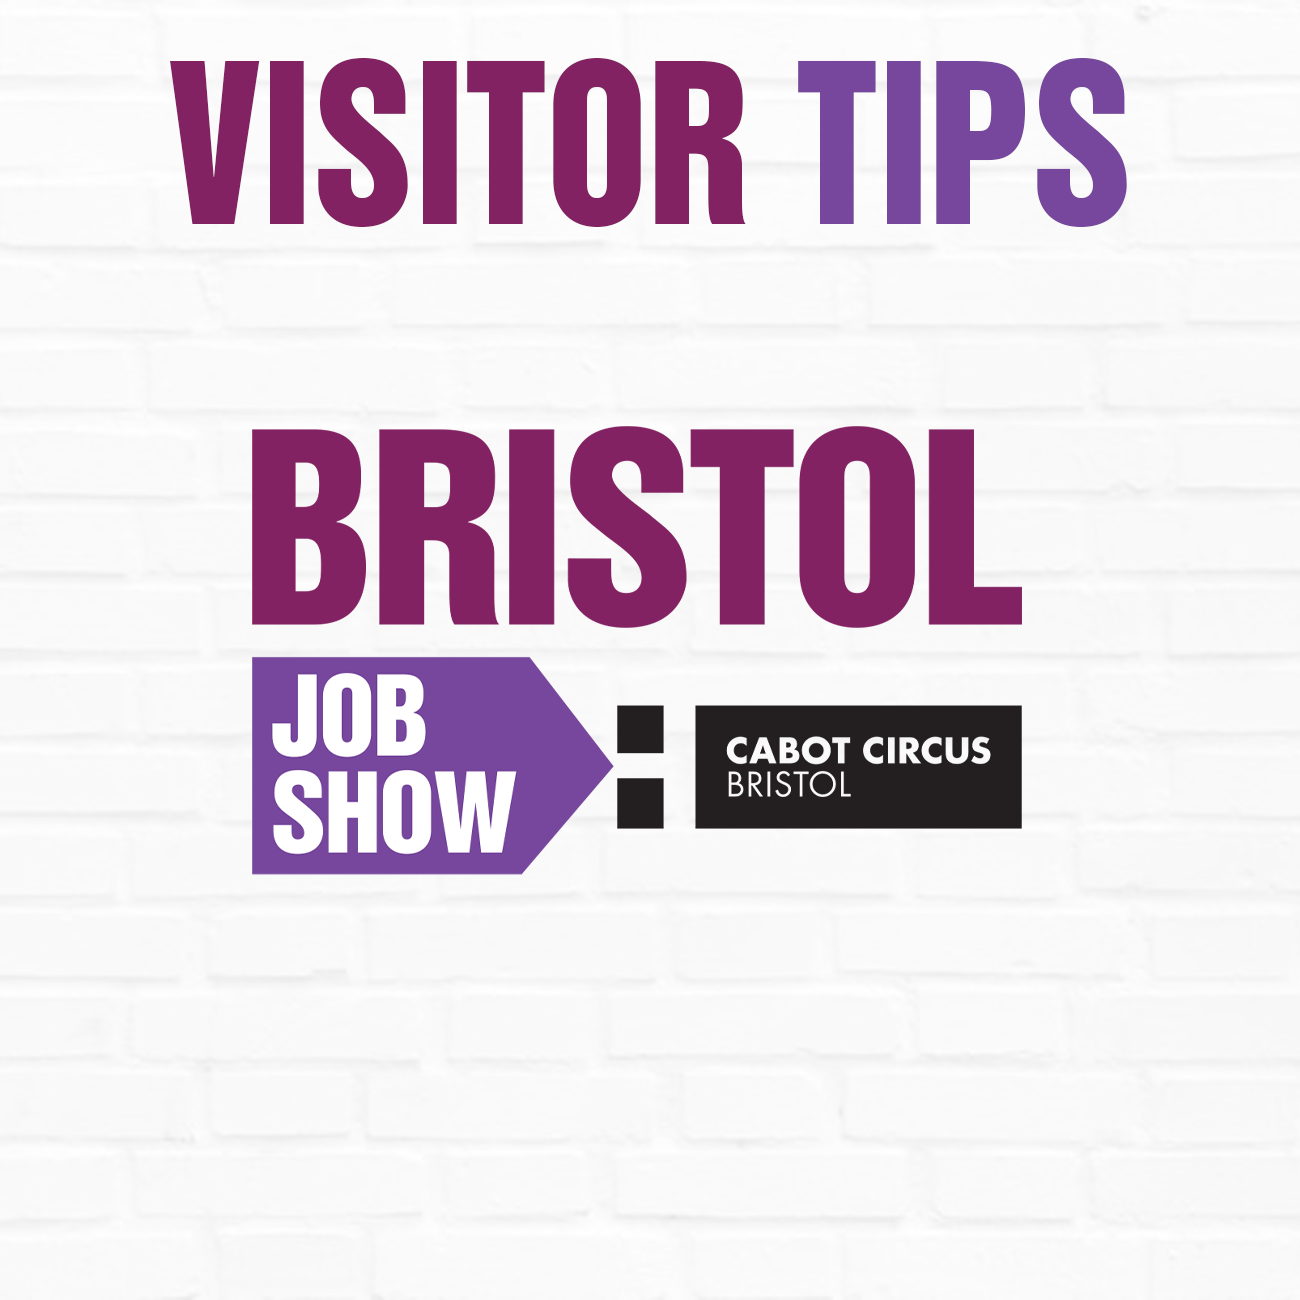 Bristol Job Show Visitor Tips